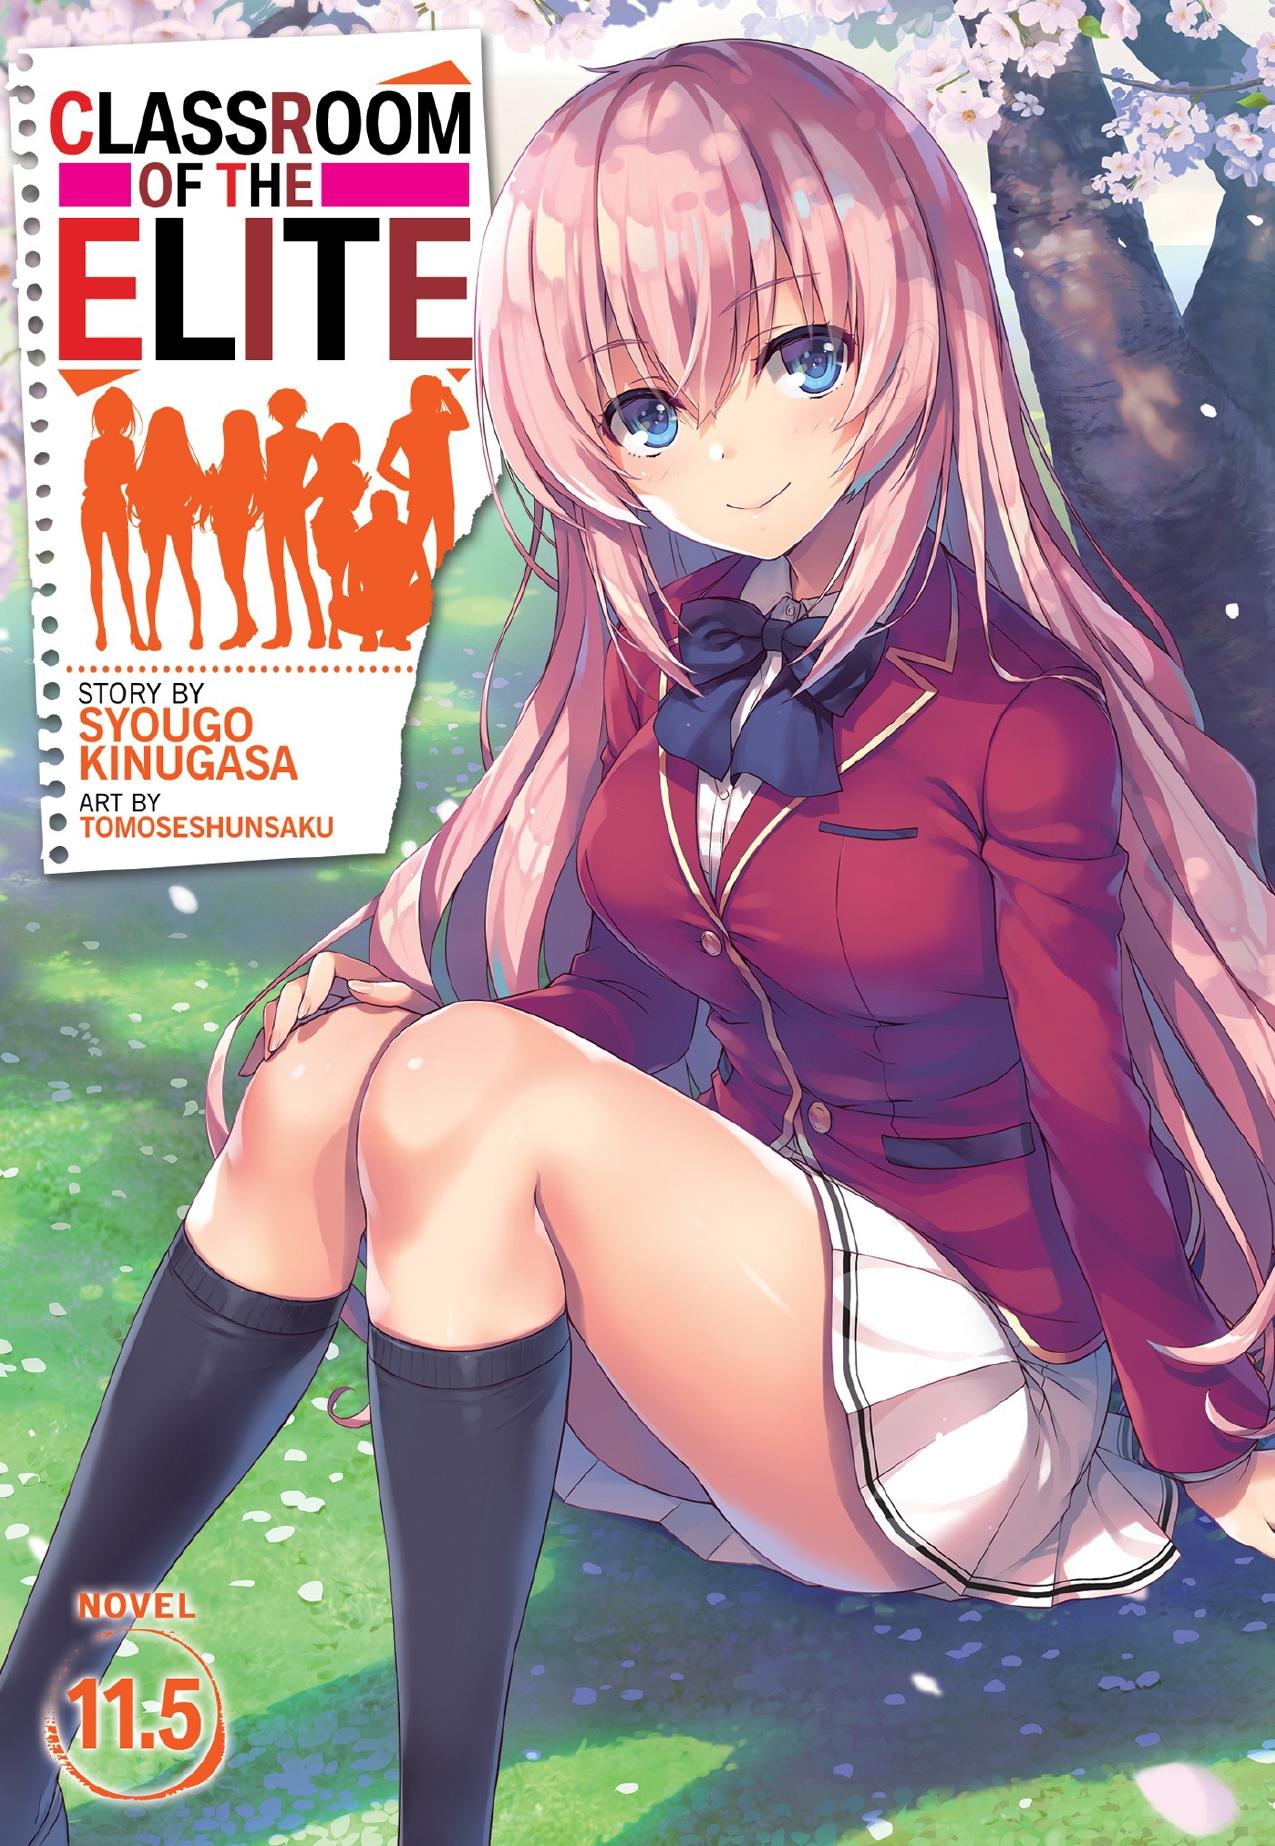 Classroom of the Elite Vol. 11.5 by Syougo Kinugasa